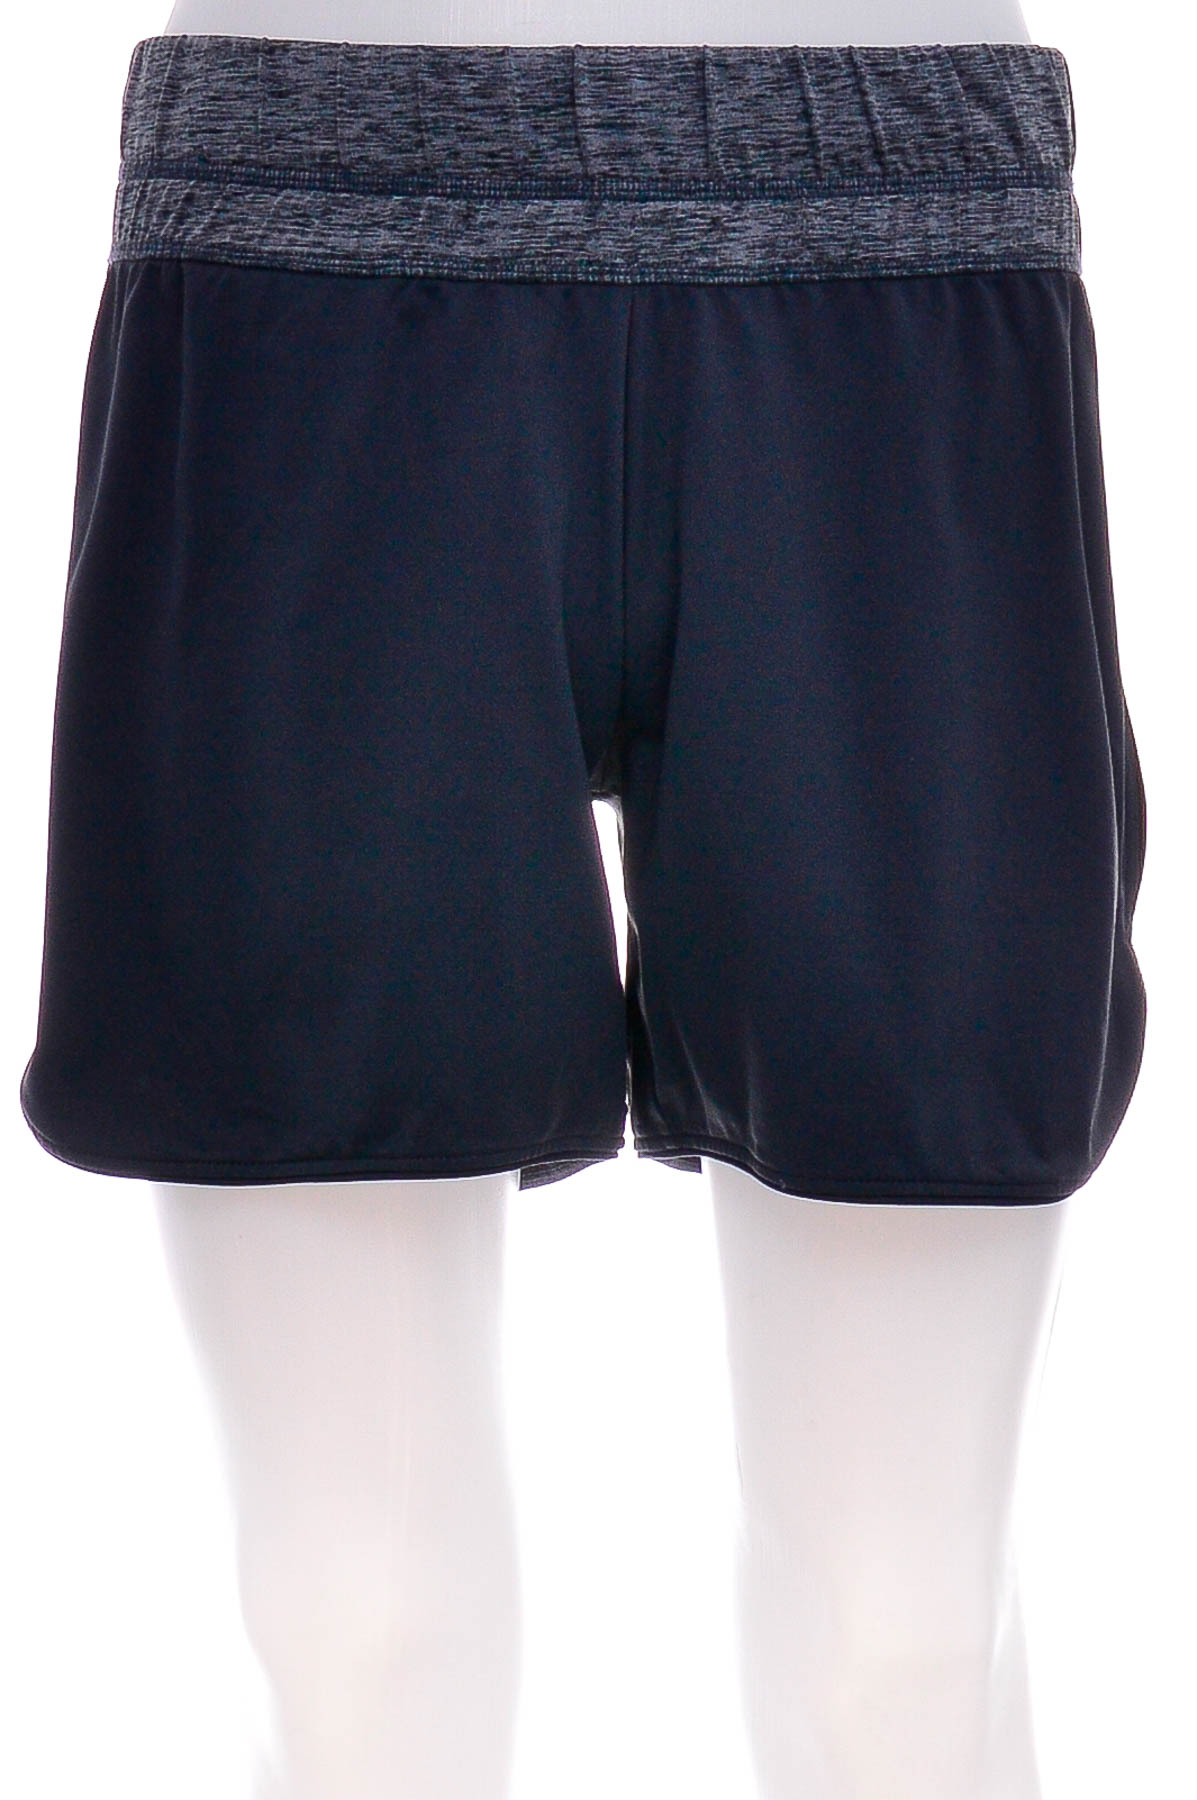 Female shorts - Venice Beach - 0